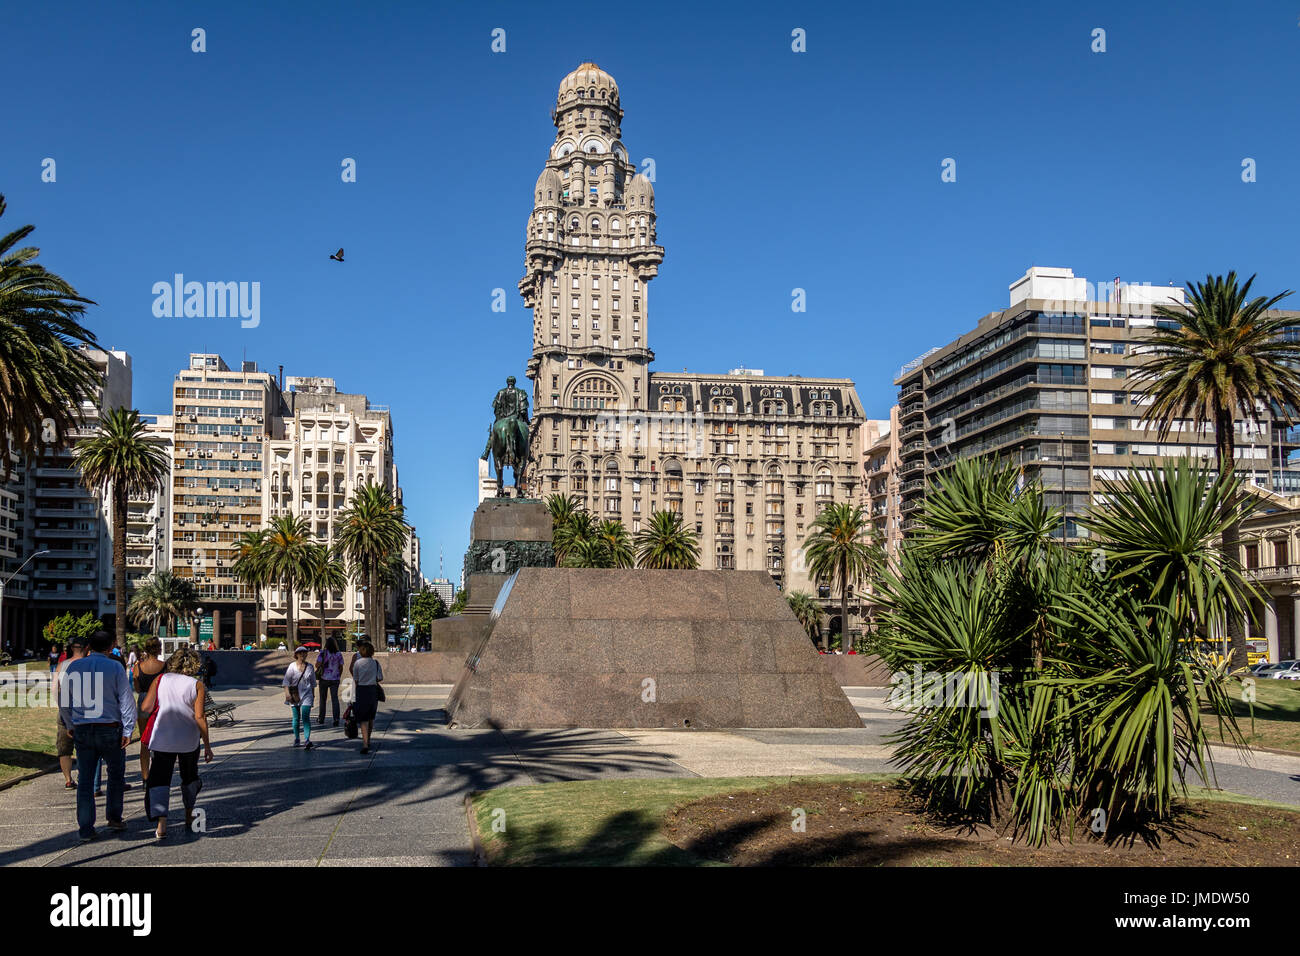 MONTEVIDEO, URUGUAY - 24 févr. 2016 : Plaza Independencia et Palacio Salvo - Montevideo, Uruguay Banque D'Images